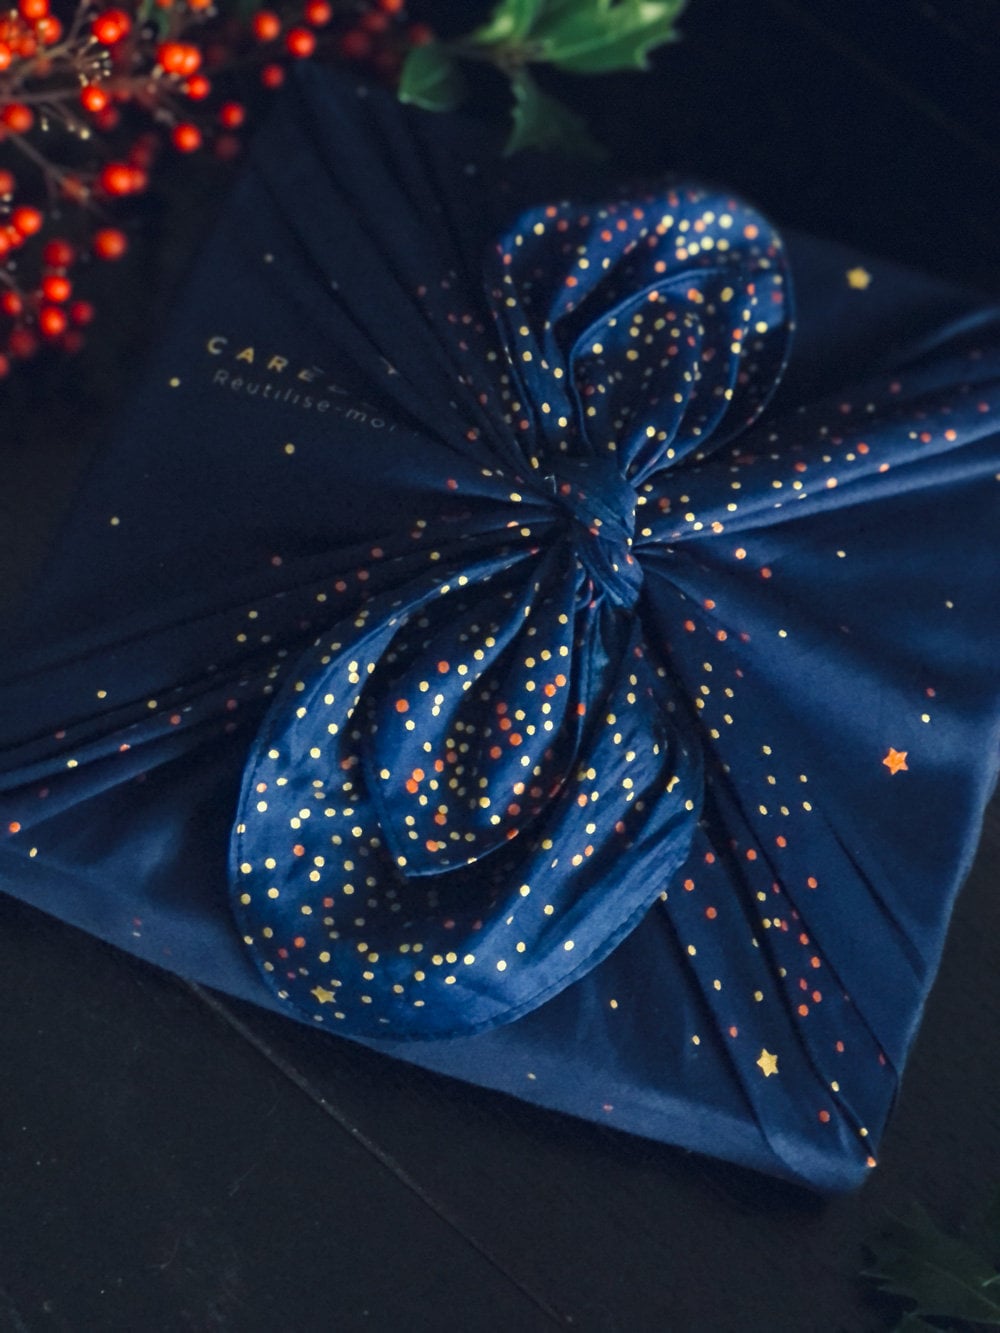 Blue Glitter Tissue Paper, Tissue Paper, Gift Wrapping, Packaging, Blue  Tissue Paper, Blue Packaging, Gift Packaging,Glitter Tissue